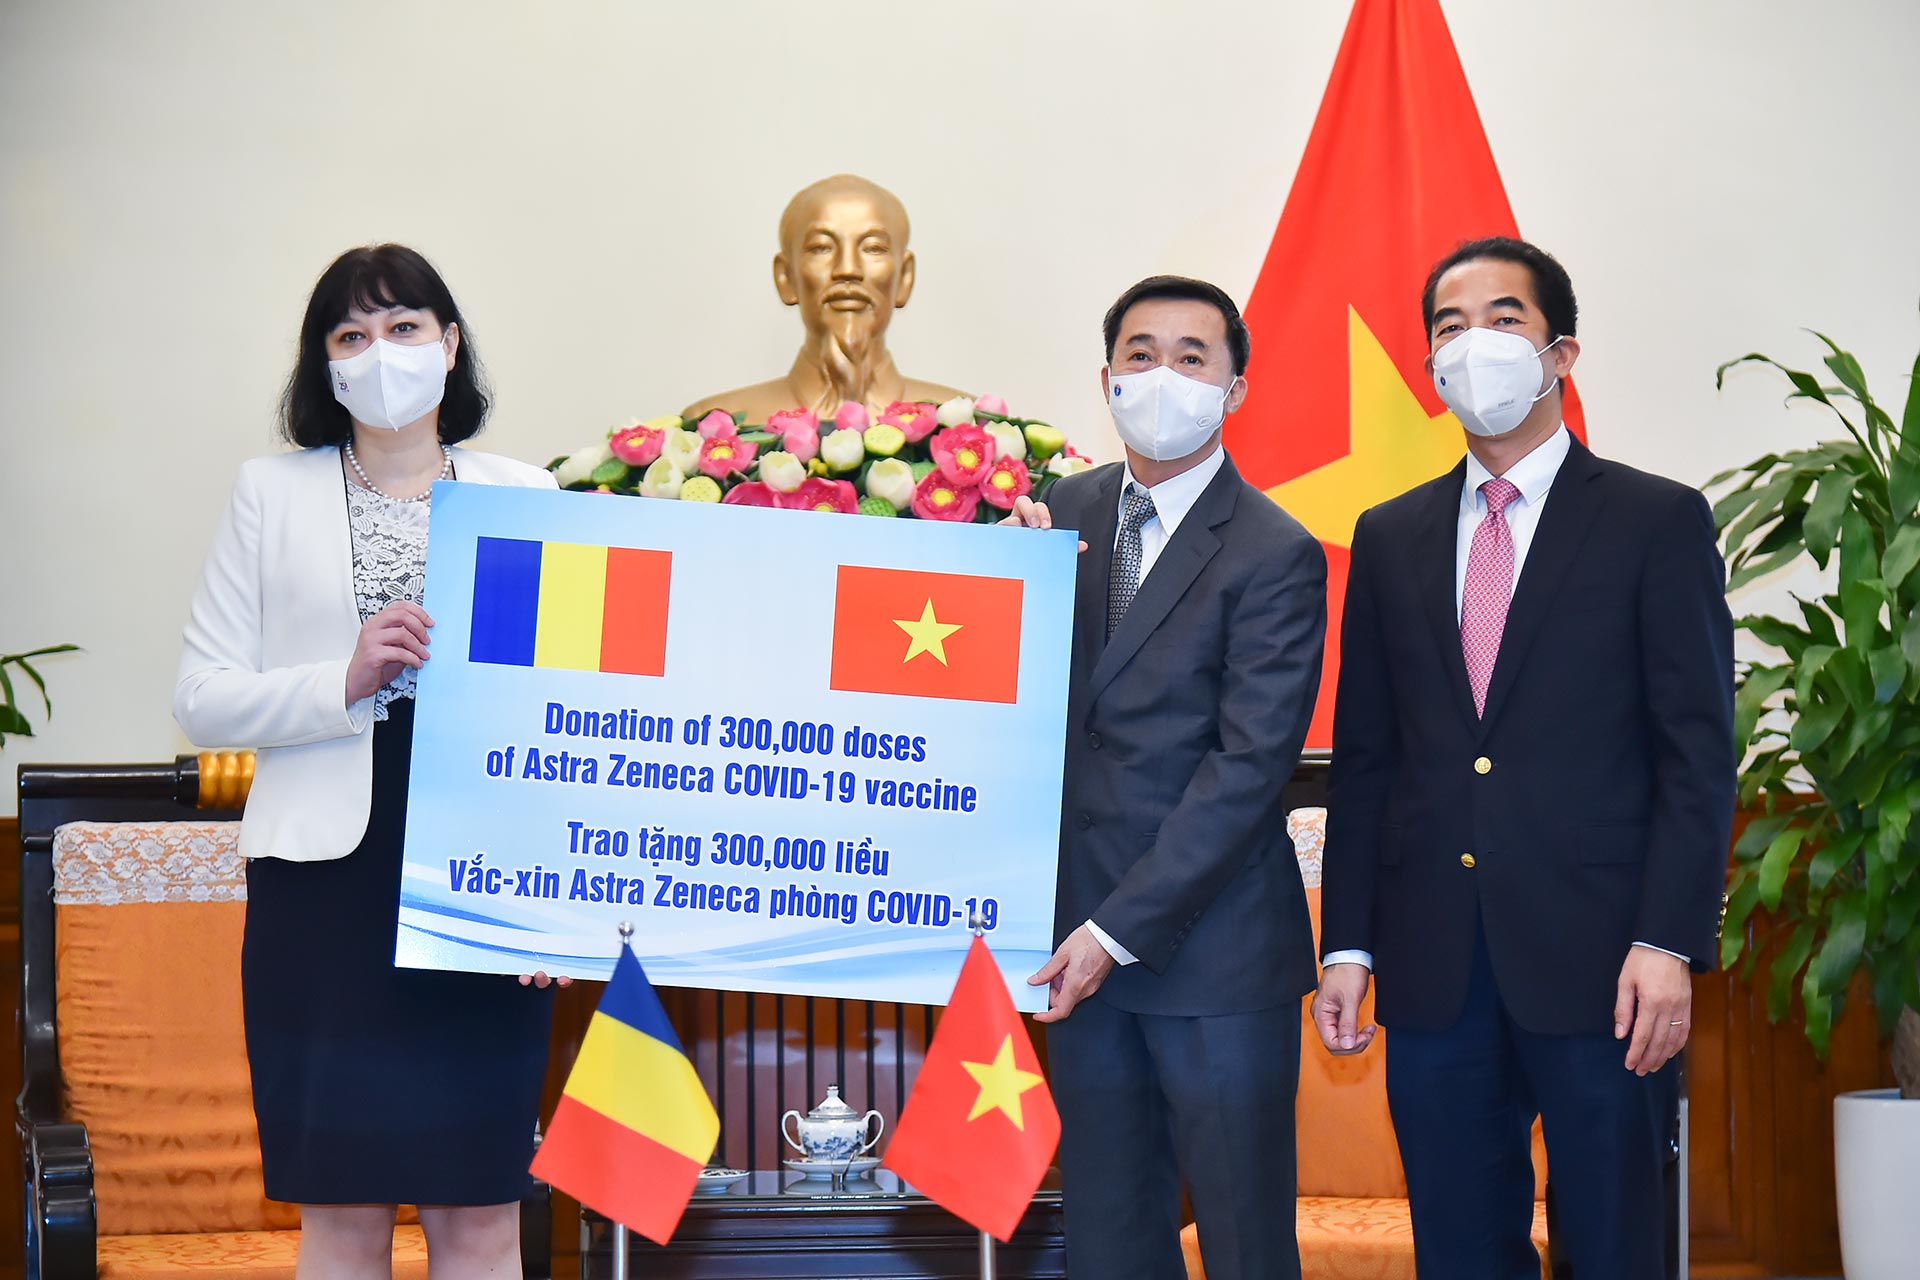  Hai quốc gia EU viện trợ vaccine Covid-19 cho Việt Nam - Ảnh 1.